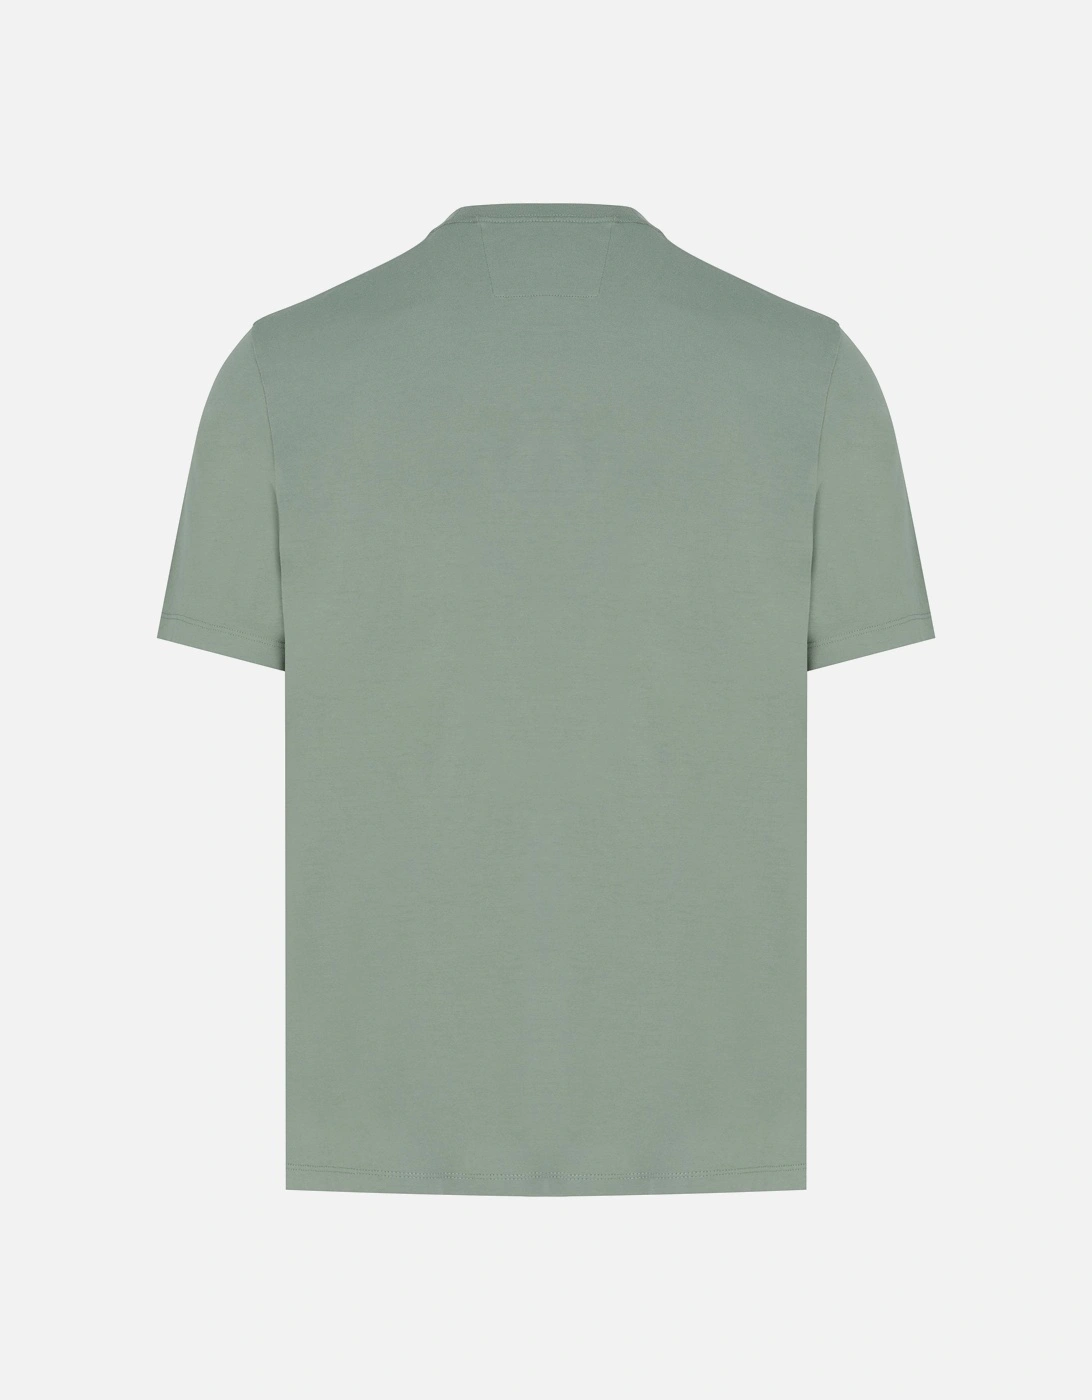 British Sailor T-shirt Green